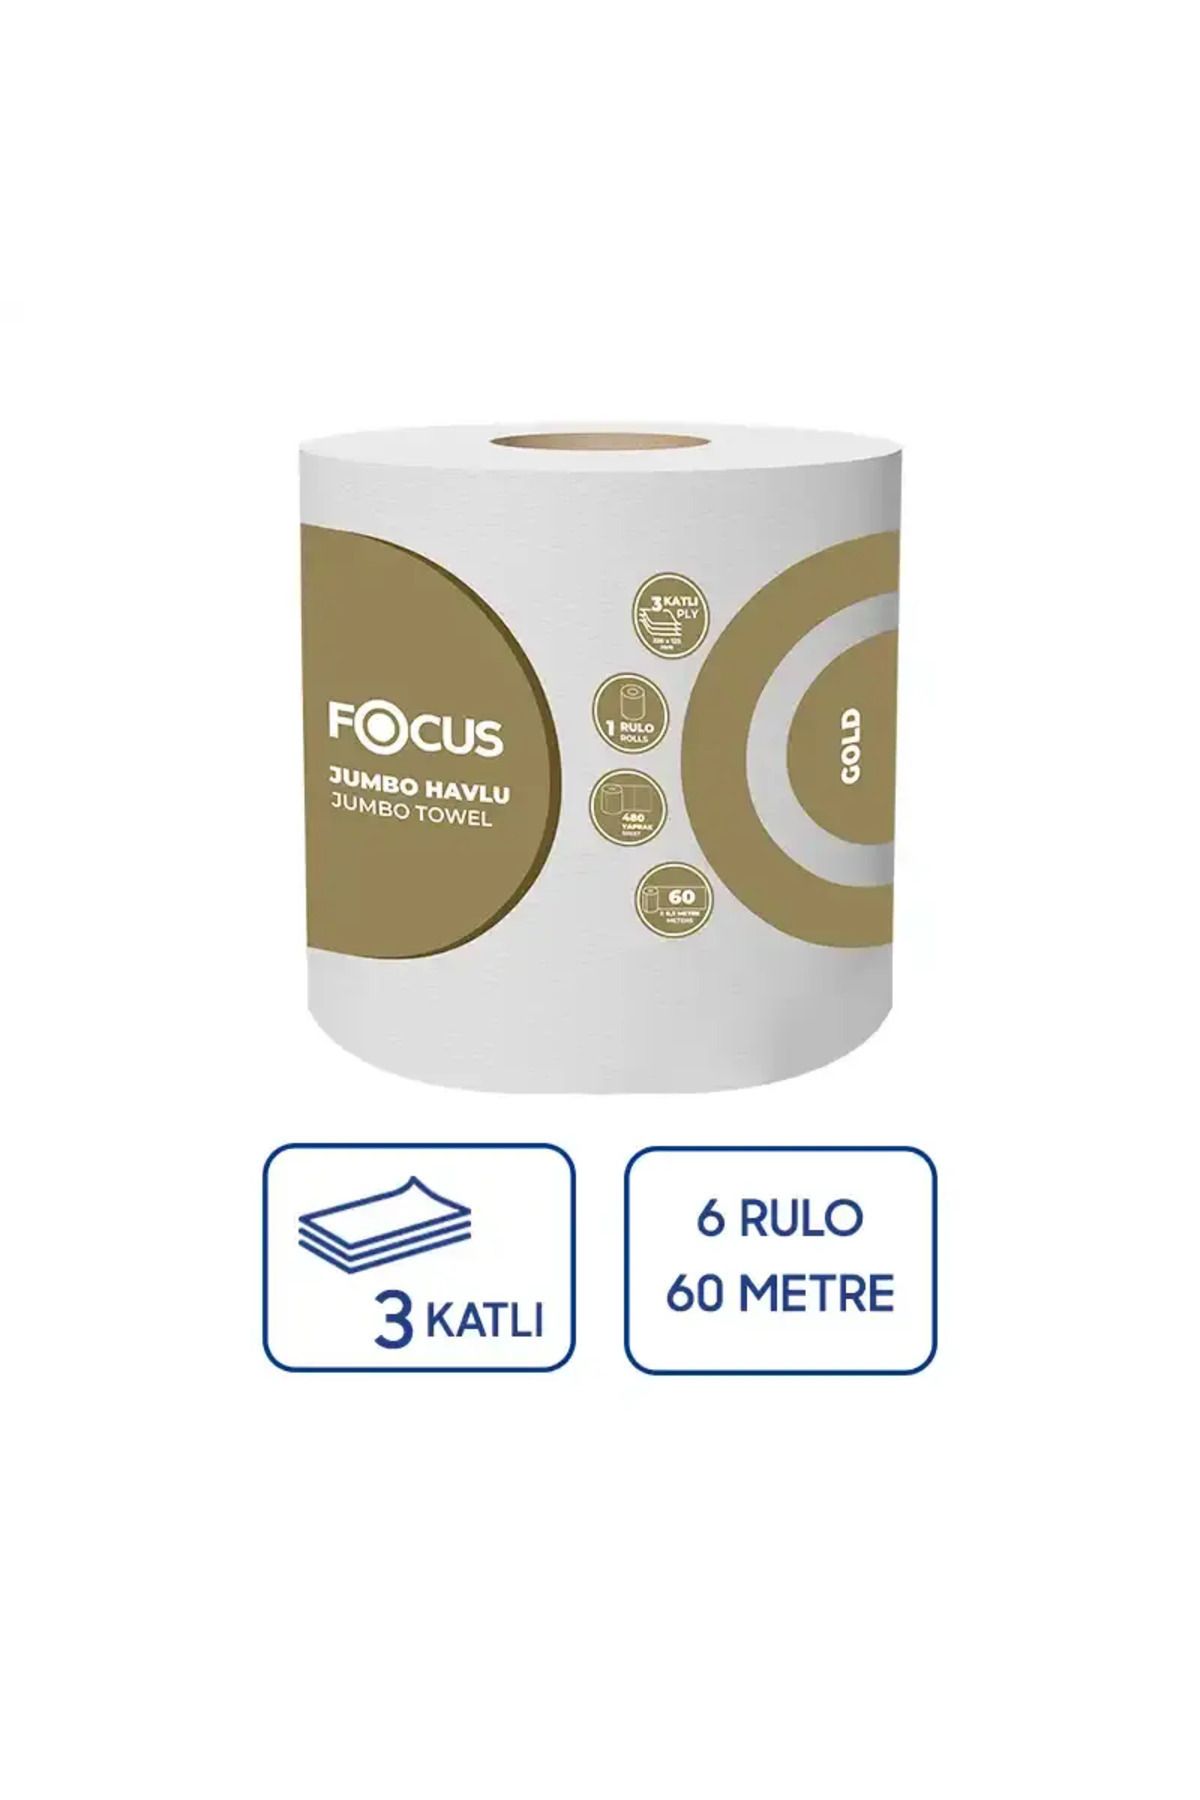 Focus Gold Jumbo Kağıt Havlu 6 Rulo x 60 Metre 3 Katlı